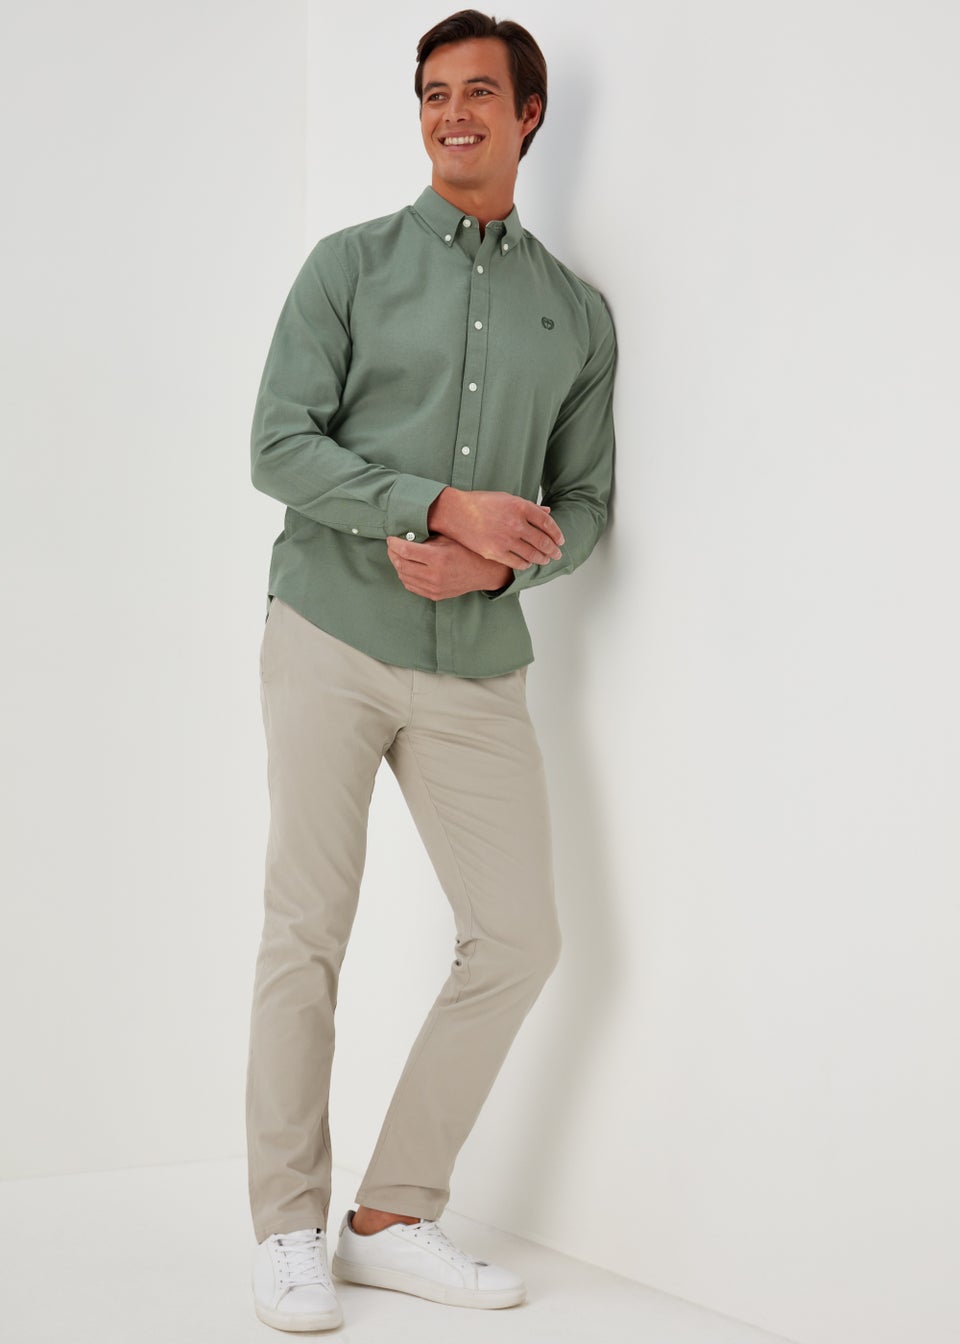 Green Oxford Long Sleeve Shirt